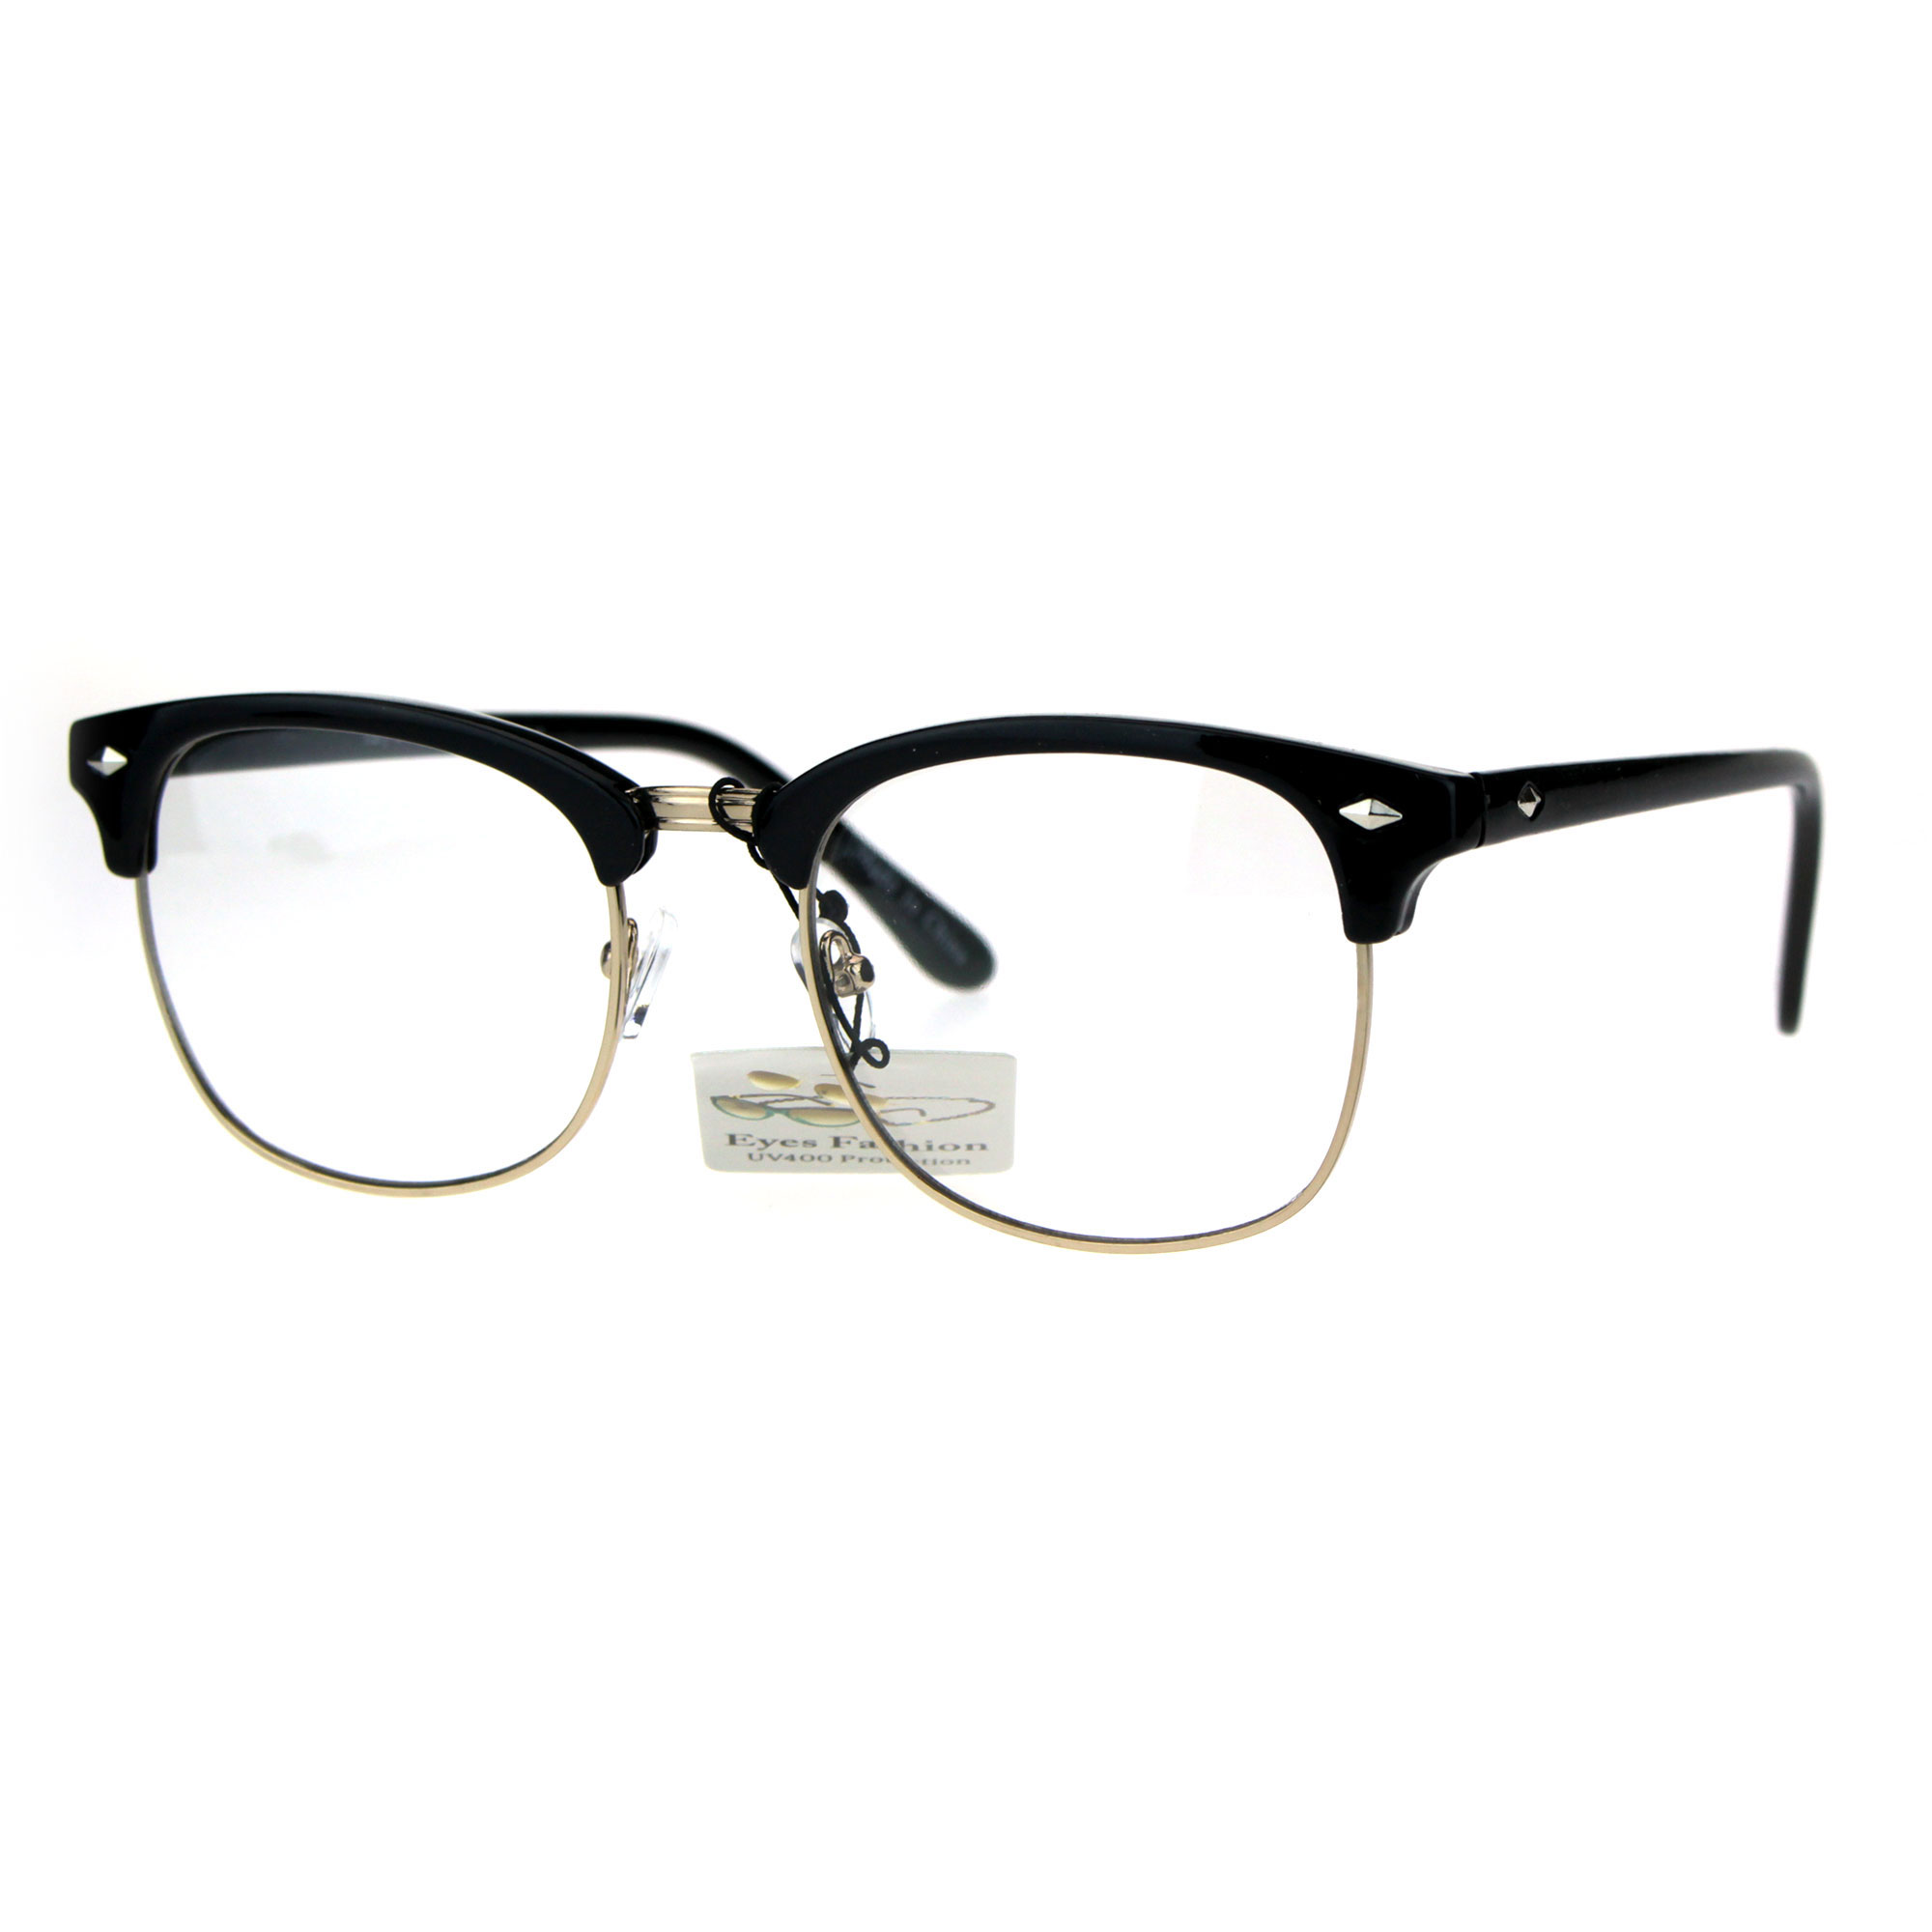 Mens Classic Horned Half Rim Hipster Nerdy Retro Eye Glasses Ebay